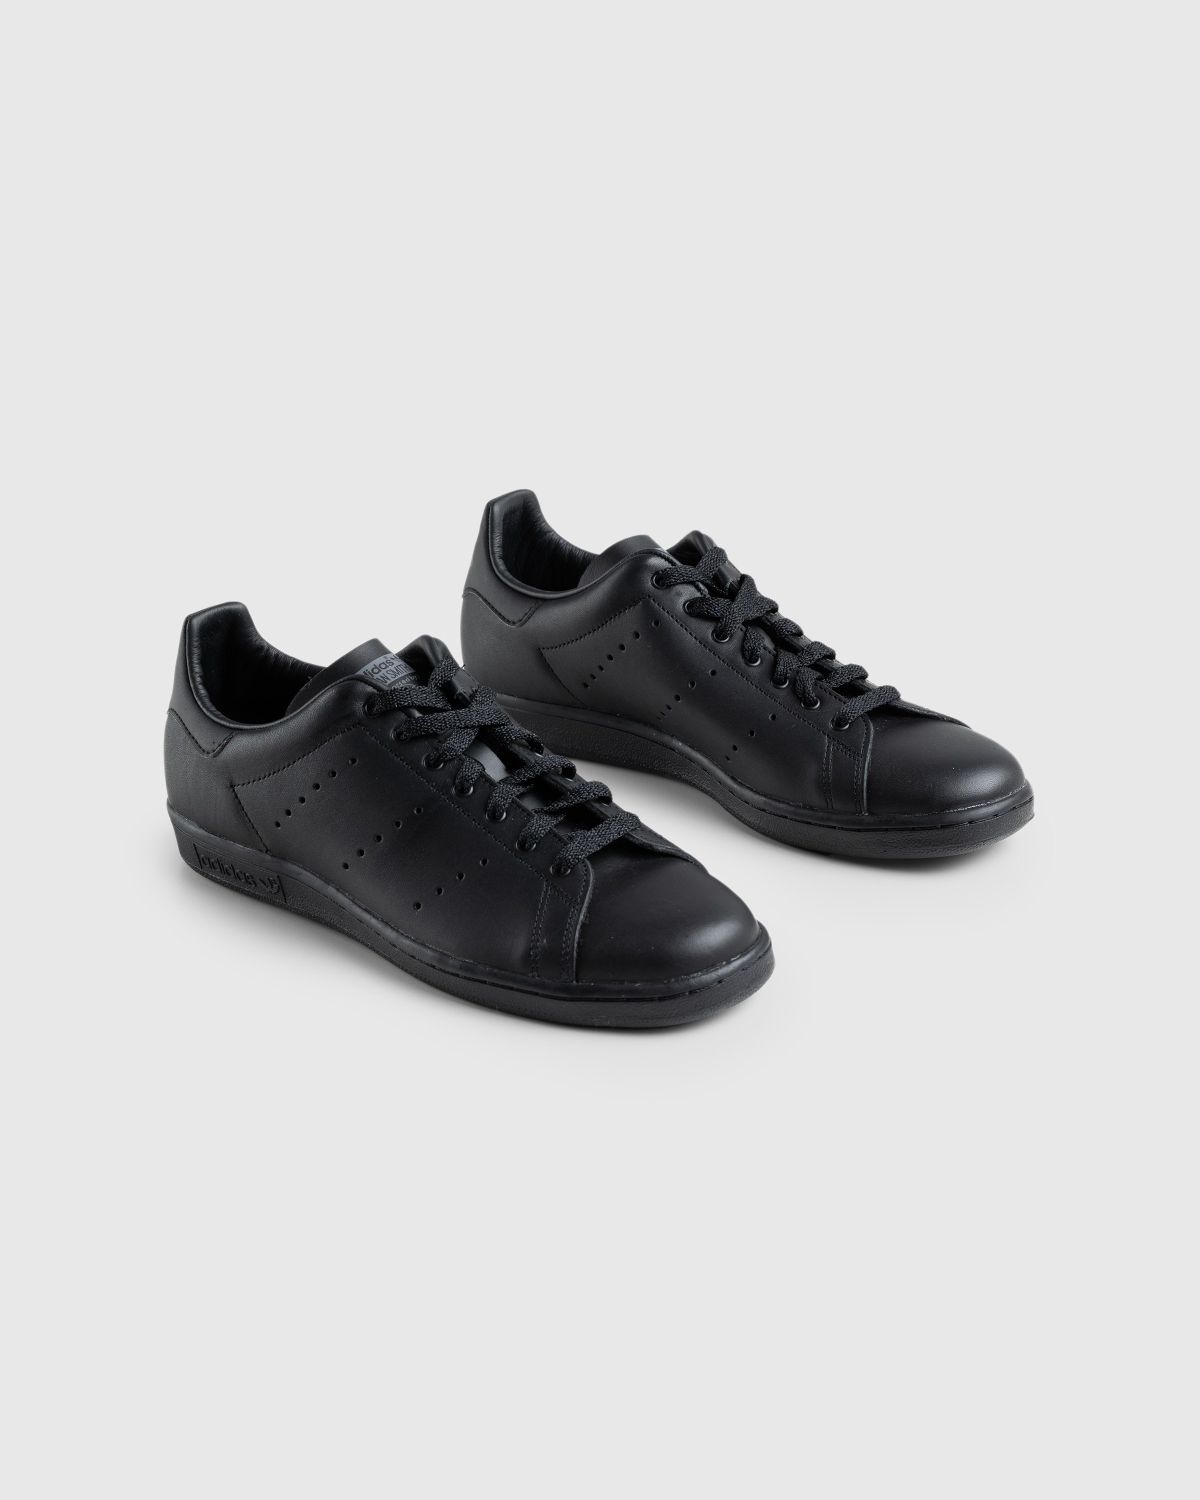 Adidas – Stan Smith 80s Black - Low Top Sneakers - Black - Image 3